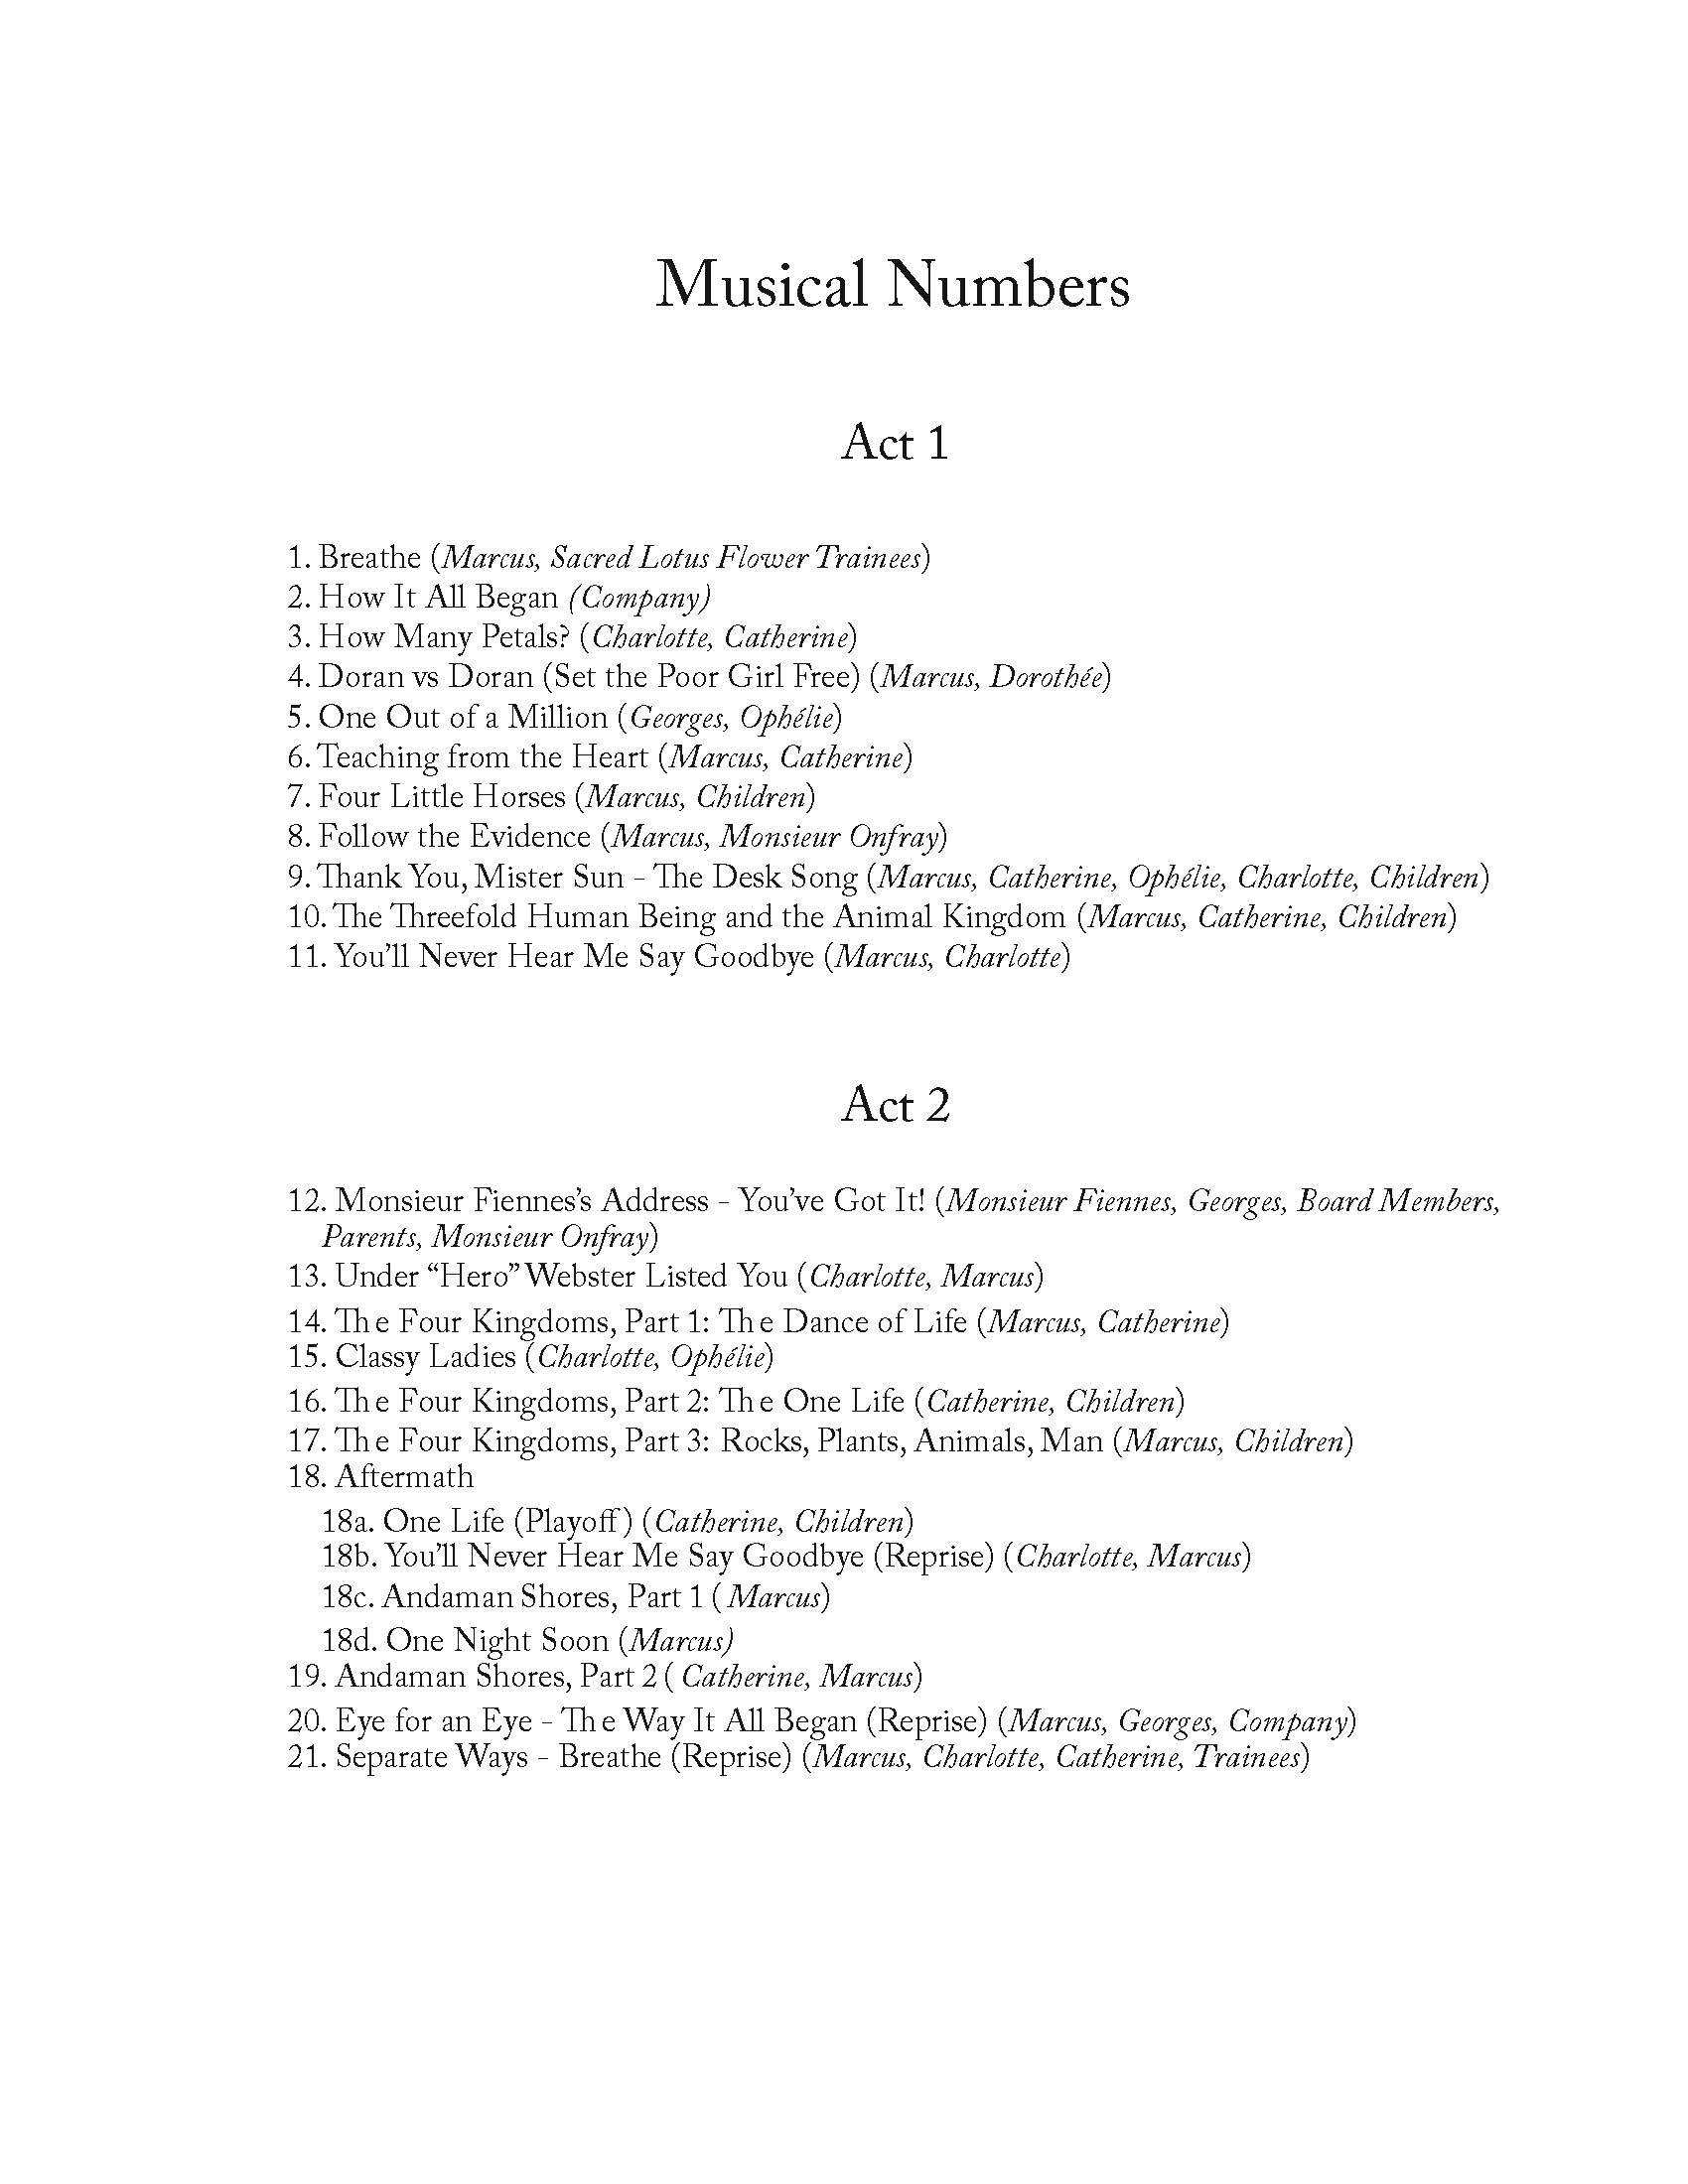 FULL PIANO VOCAL SCORE DRAFT 1 - Score_Page_003.jpg